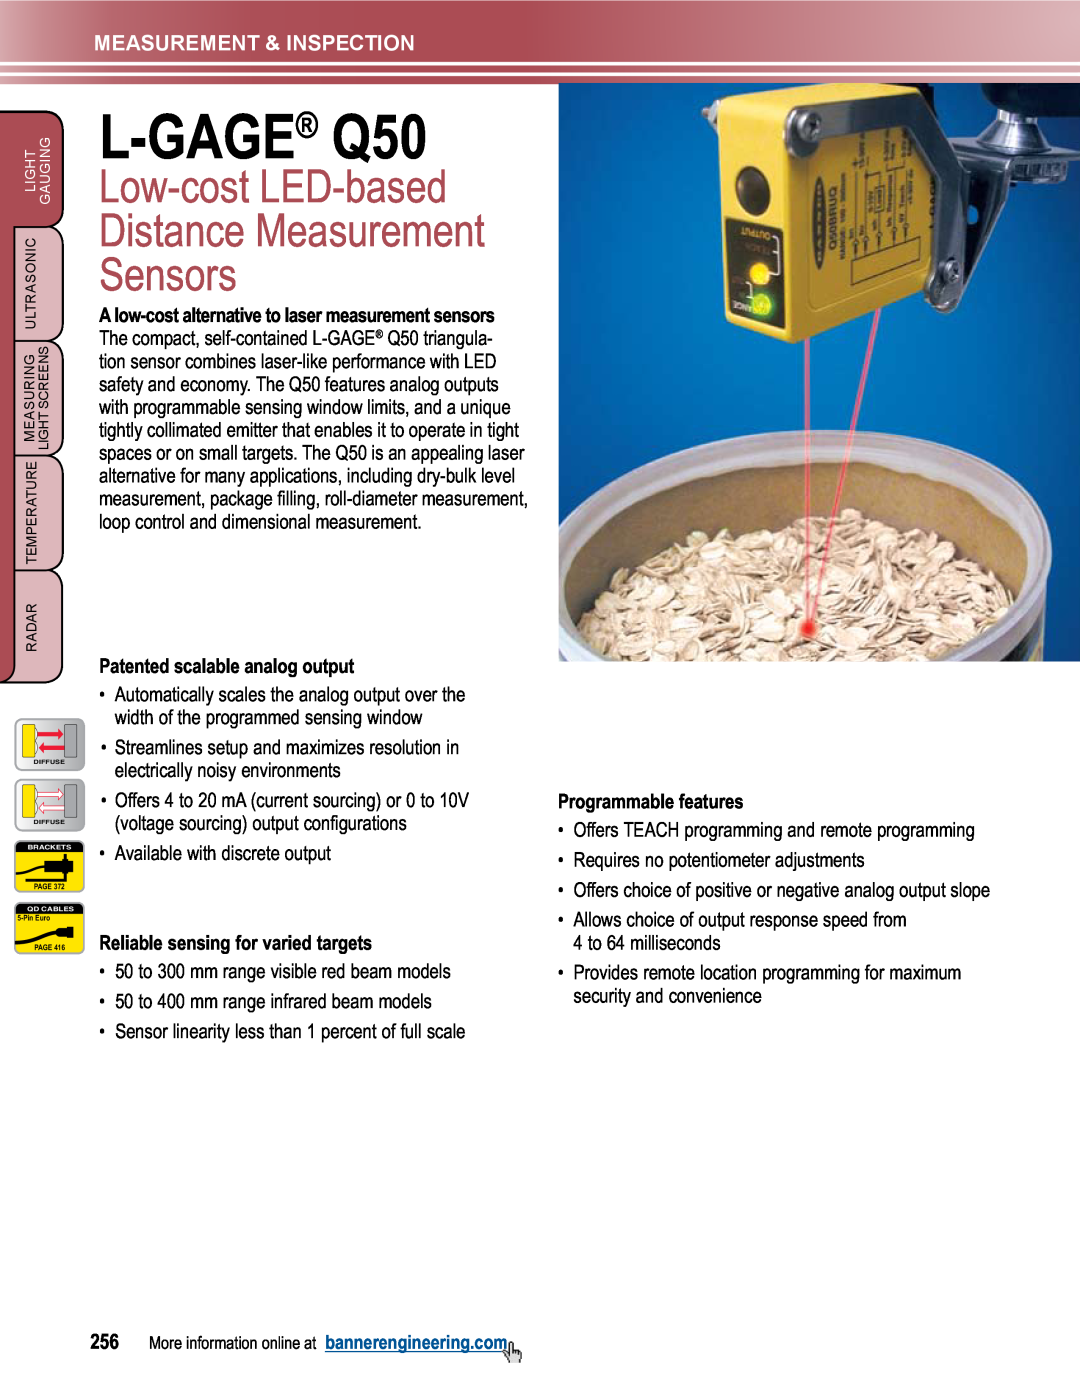 Banner manual L-GAGE Q50, Low-cost LED-based Distance Measurement Sensors, Measurement & Inspection 